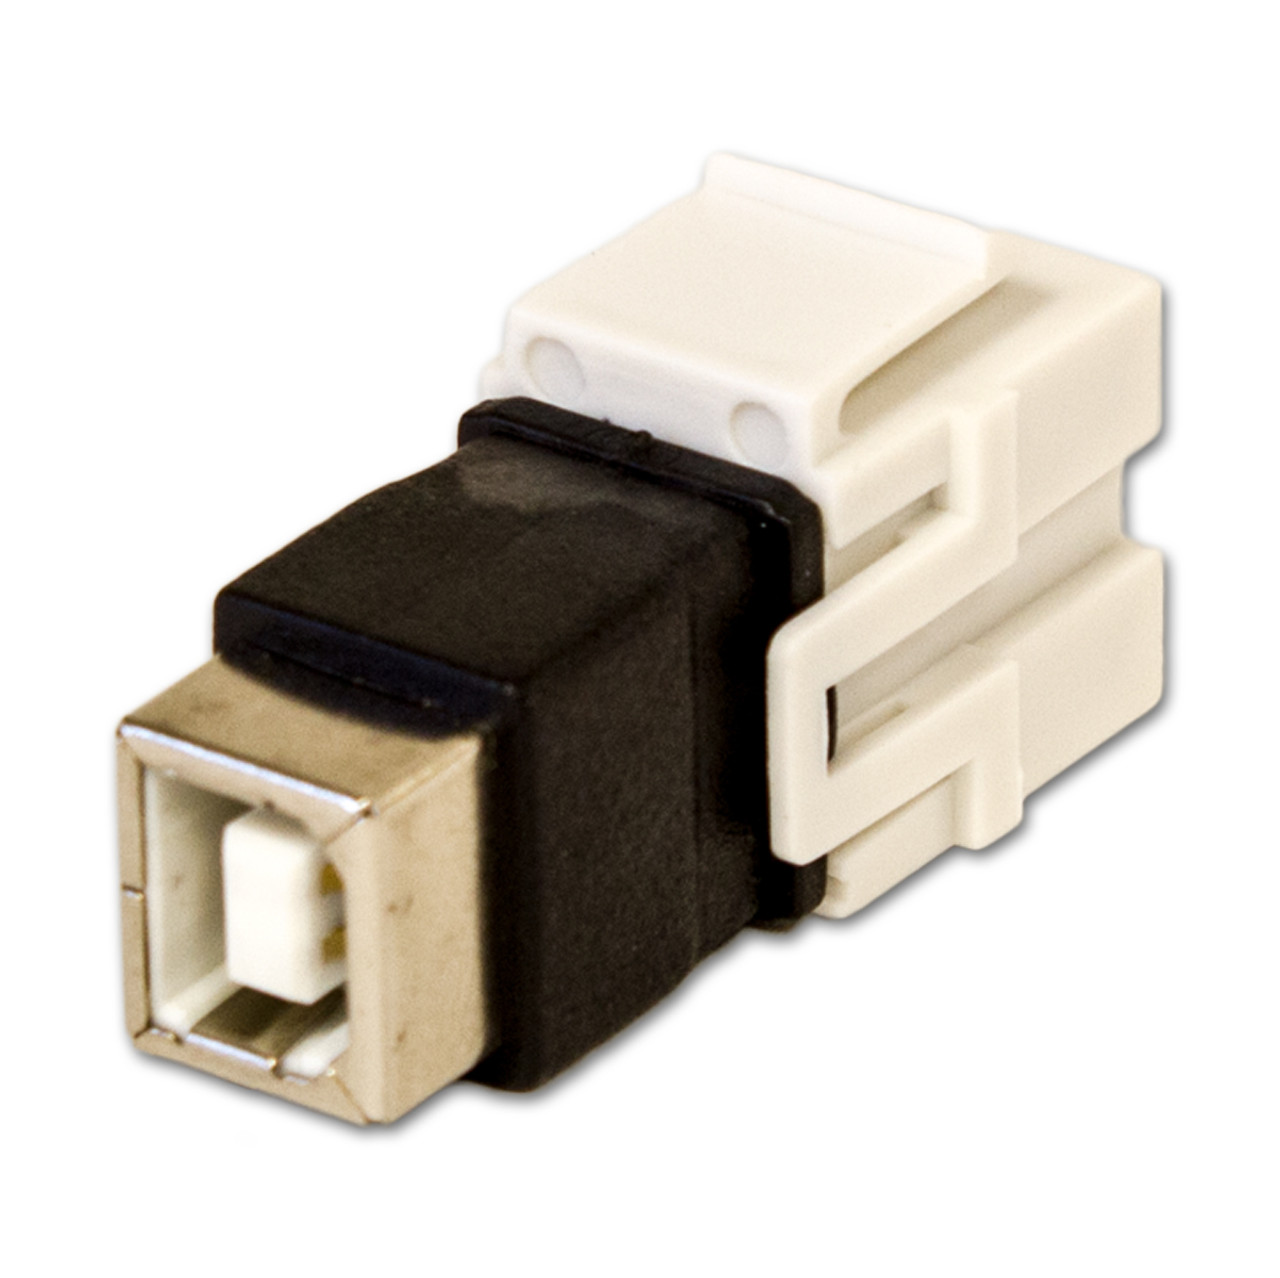 NavePoint USB 2.0 B Female to Female Keystone Adapter White 10-pack